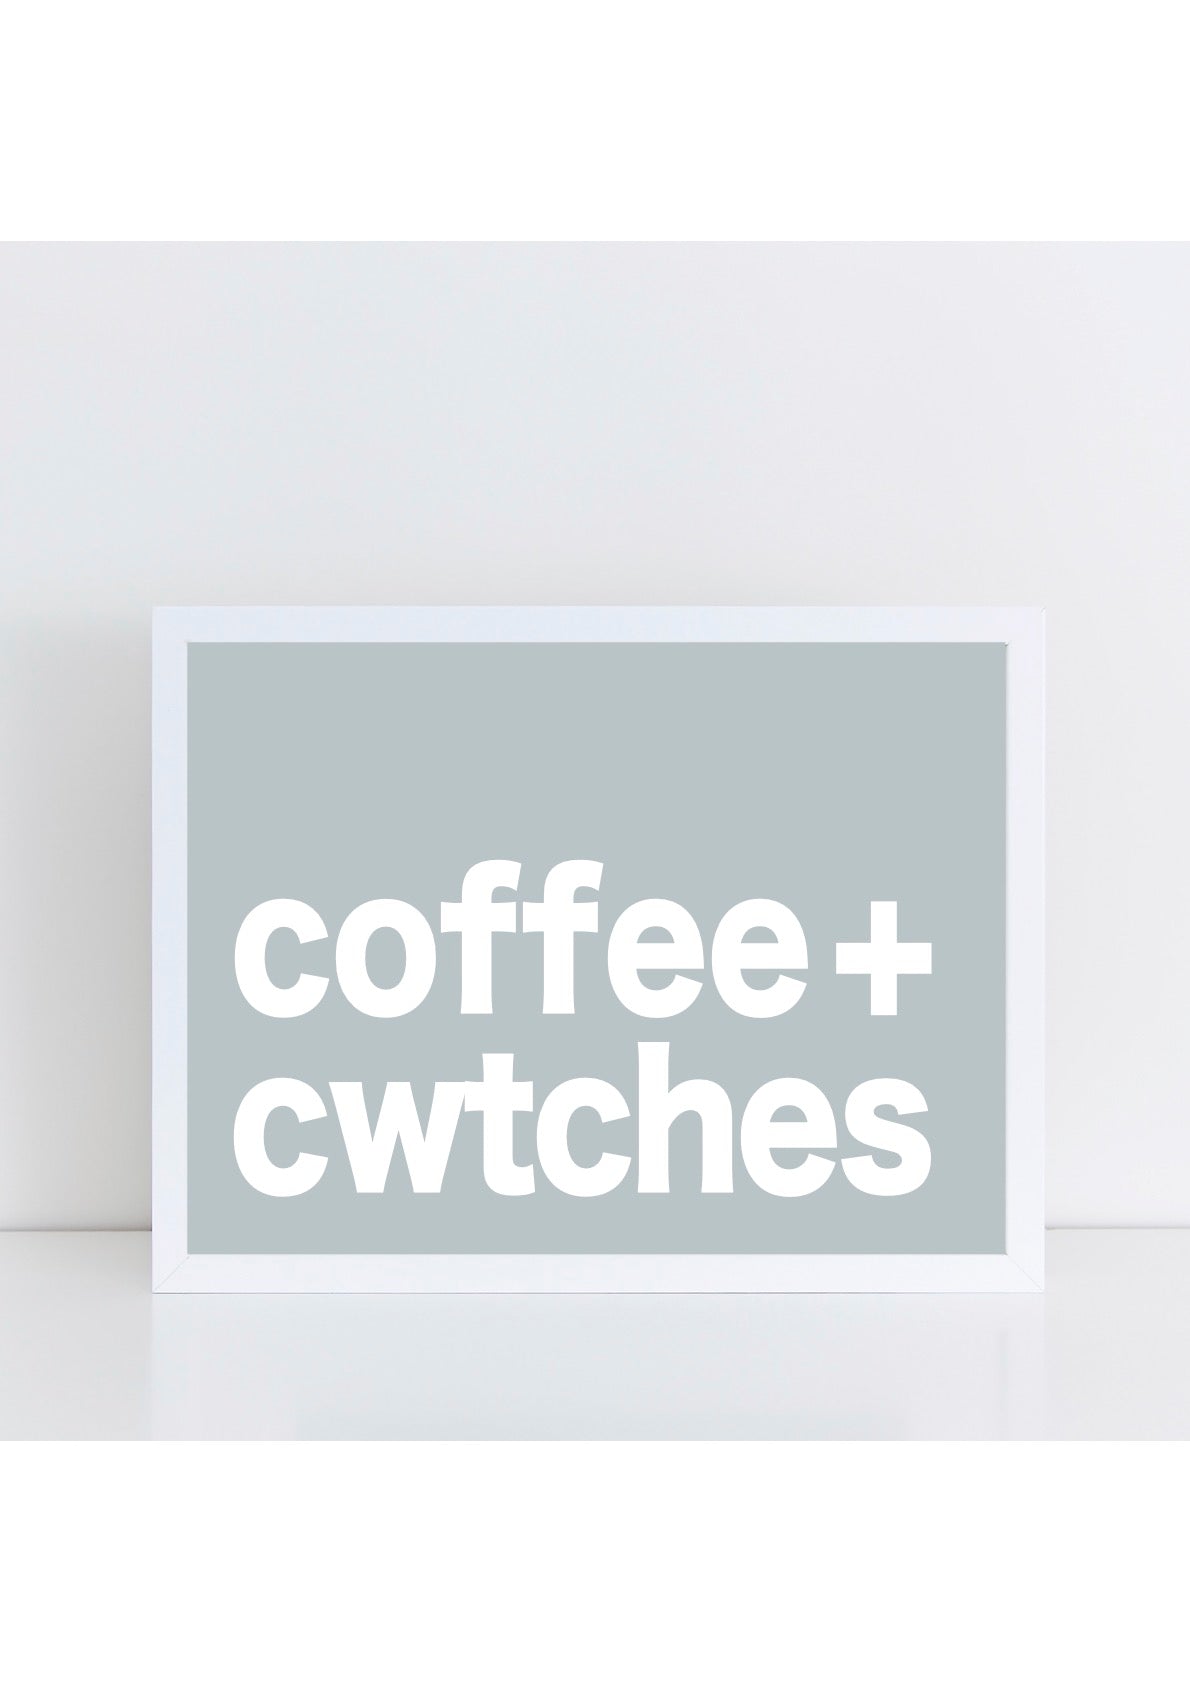 Coffee + Cwtches Print - Blue